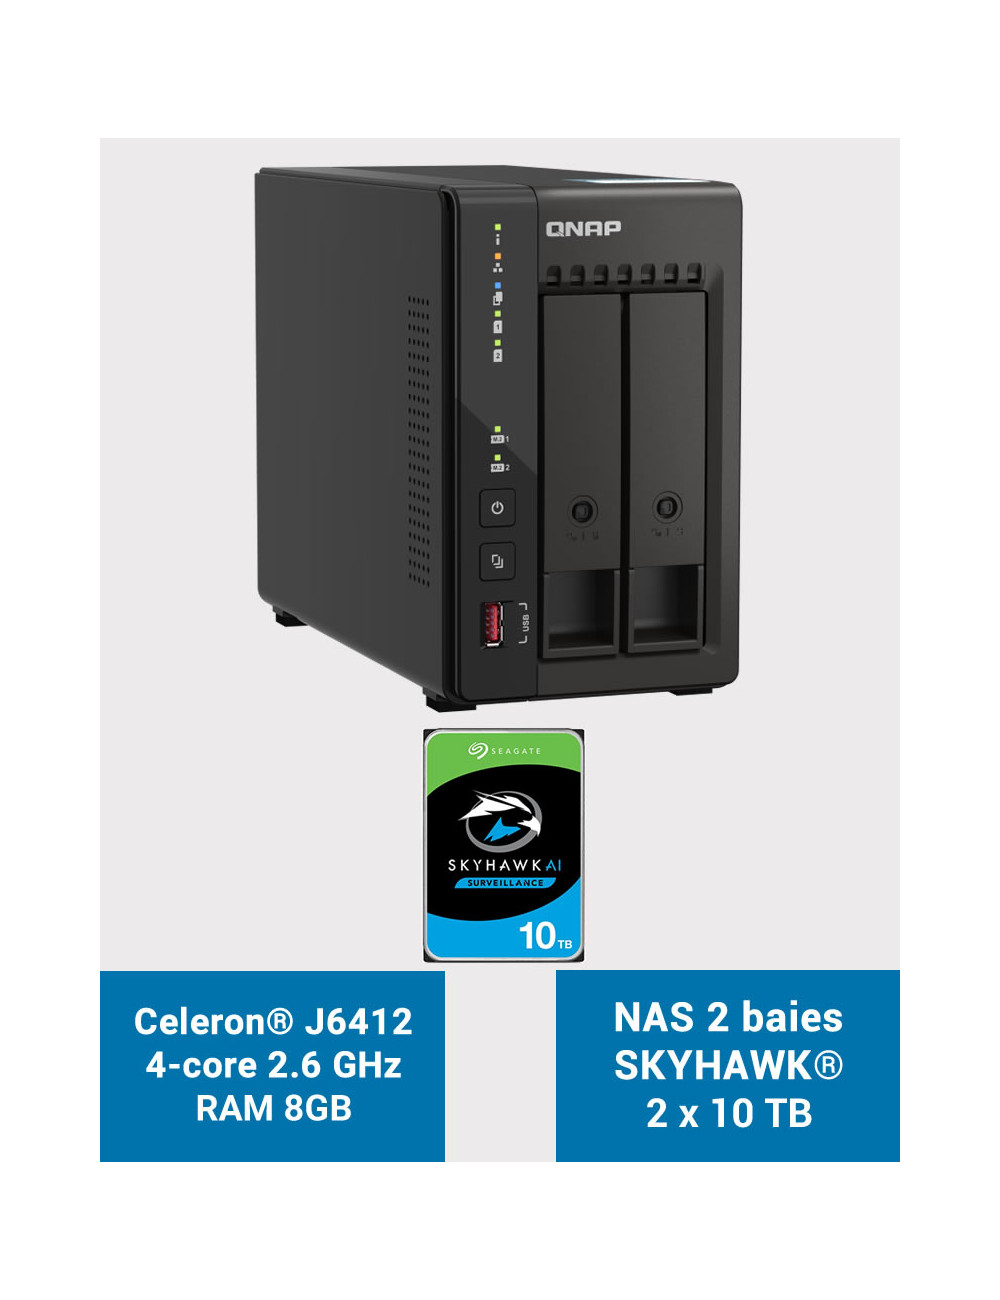 QNAP TS-253E 8GB NAS Server 2 bays SKYHAWK 20TB (2x10TB)